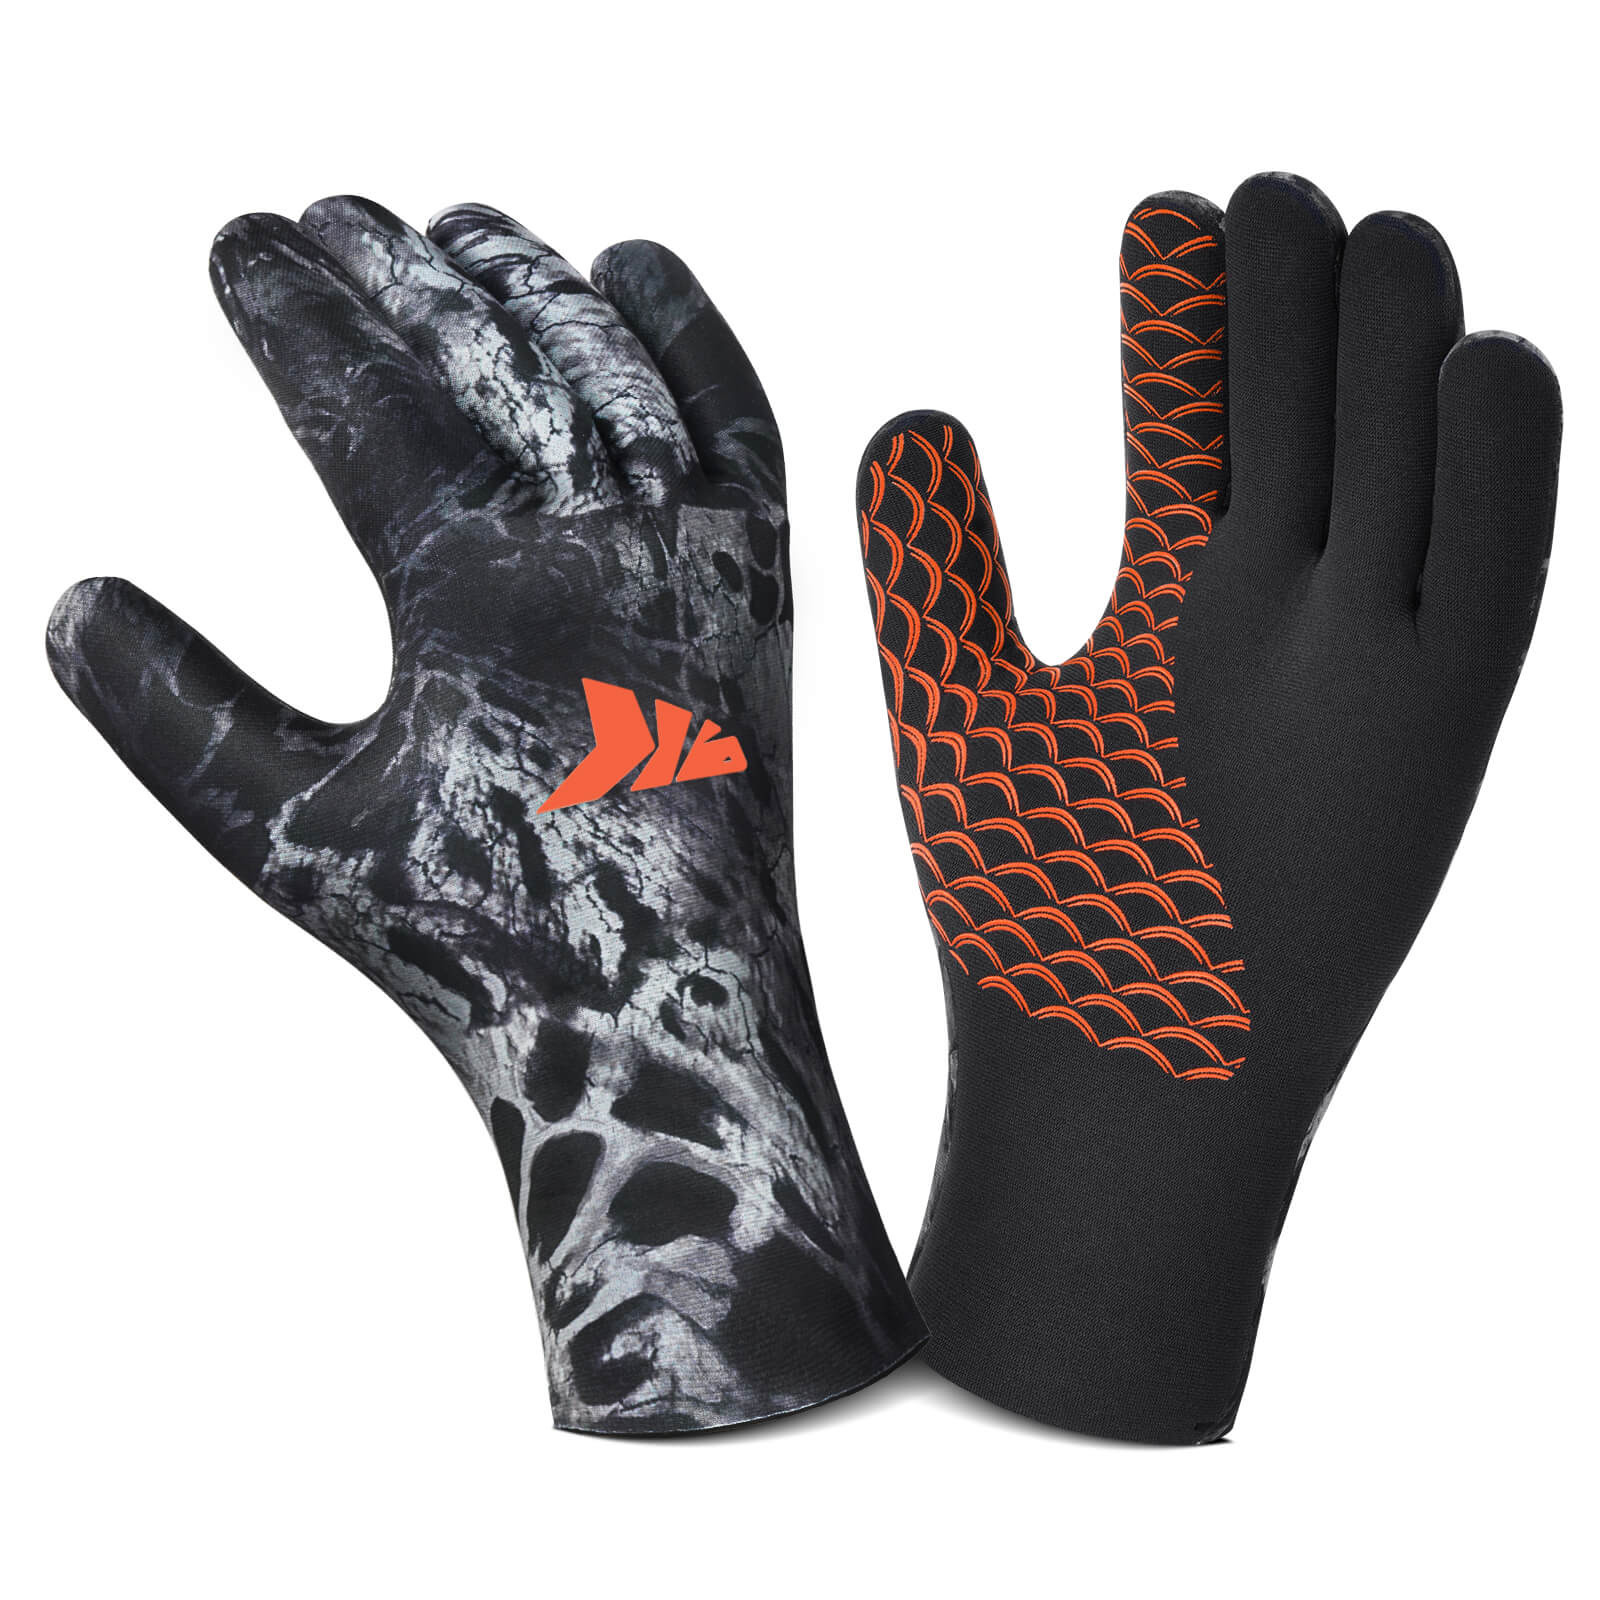 25.6 PVC Rubber Waterproof Fishing Gloves Fisherman Gloves Safety